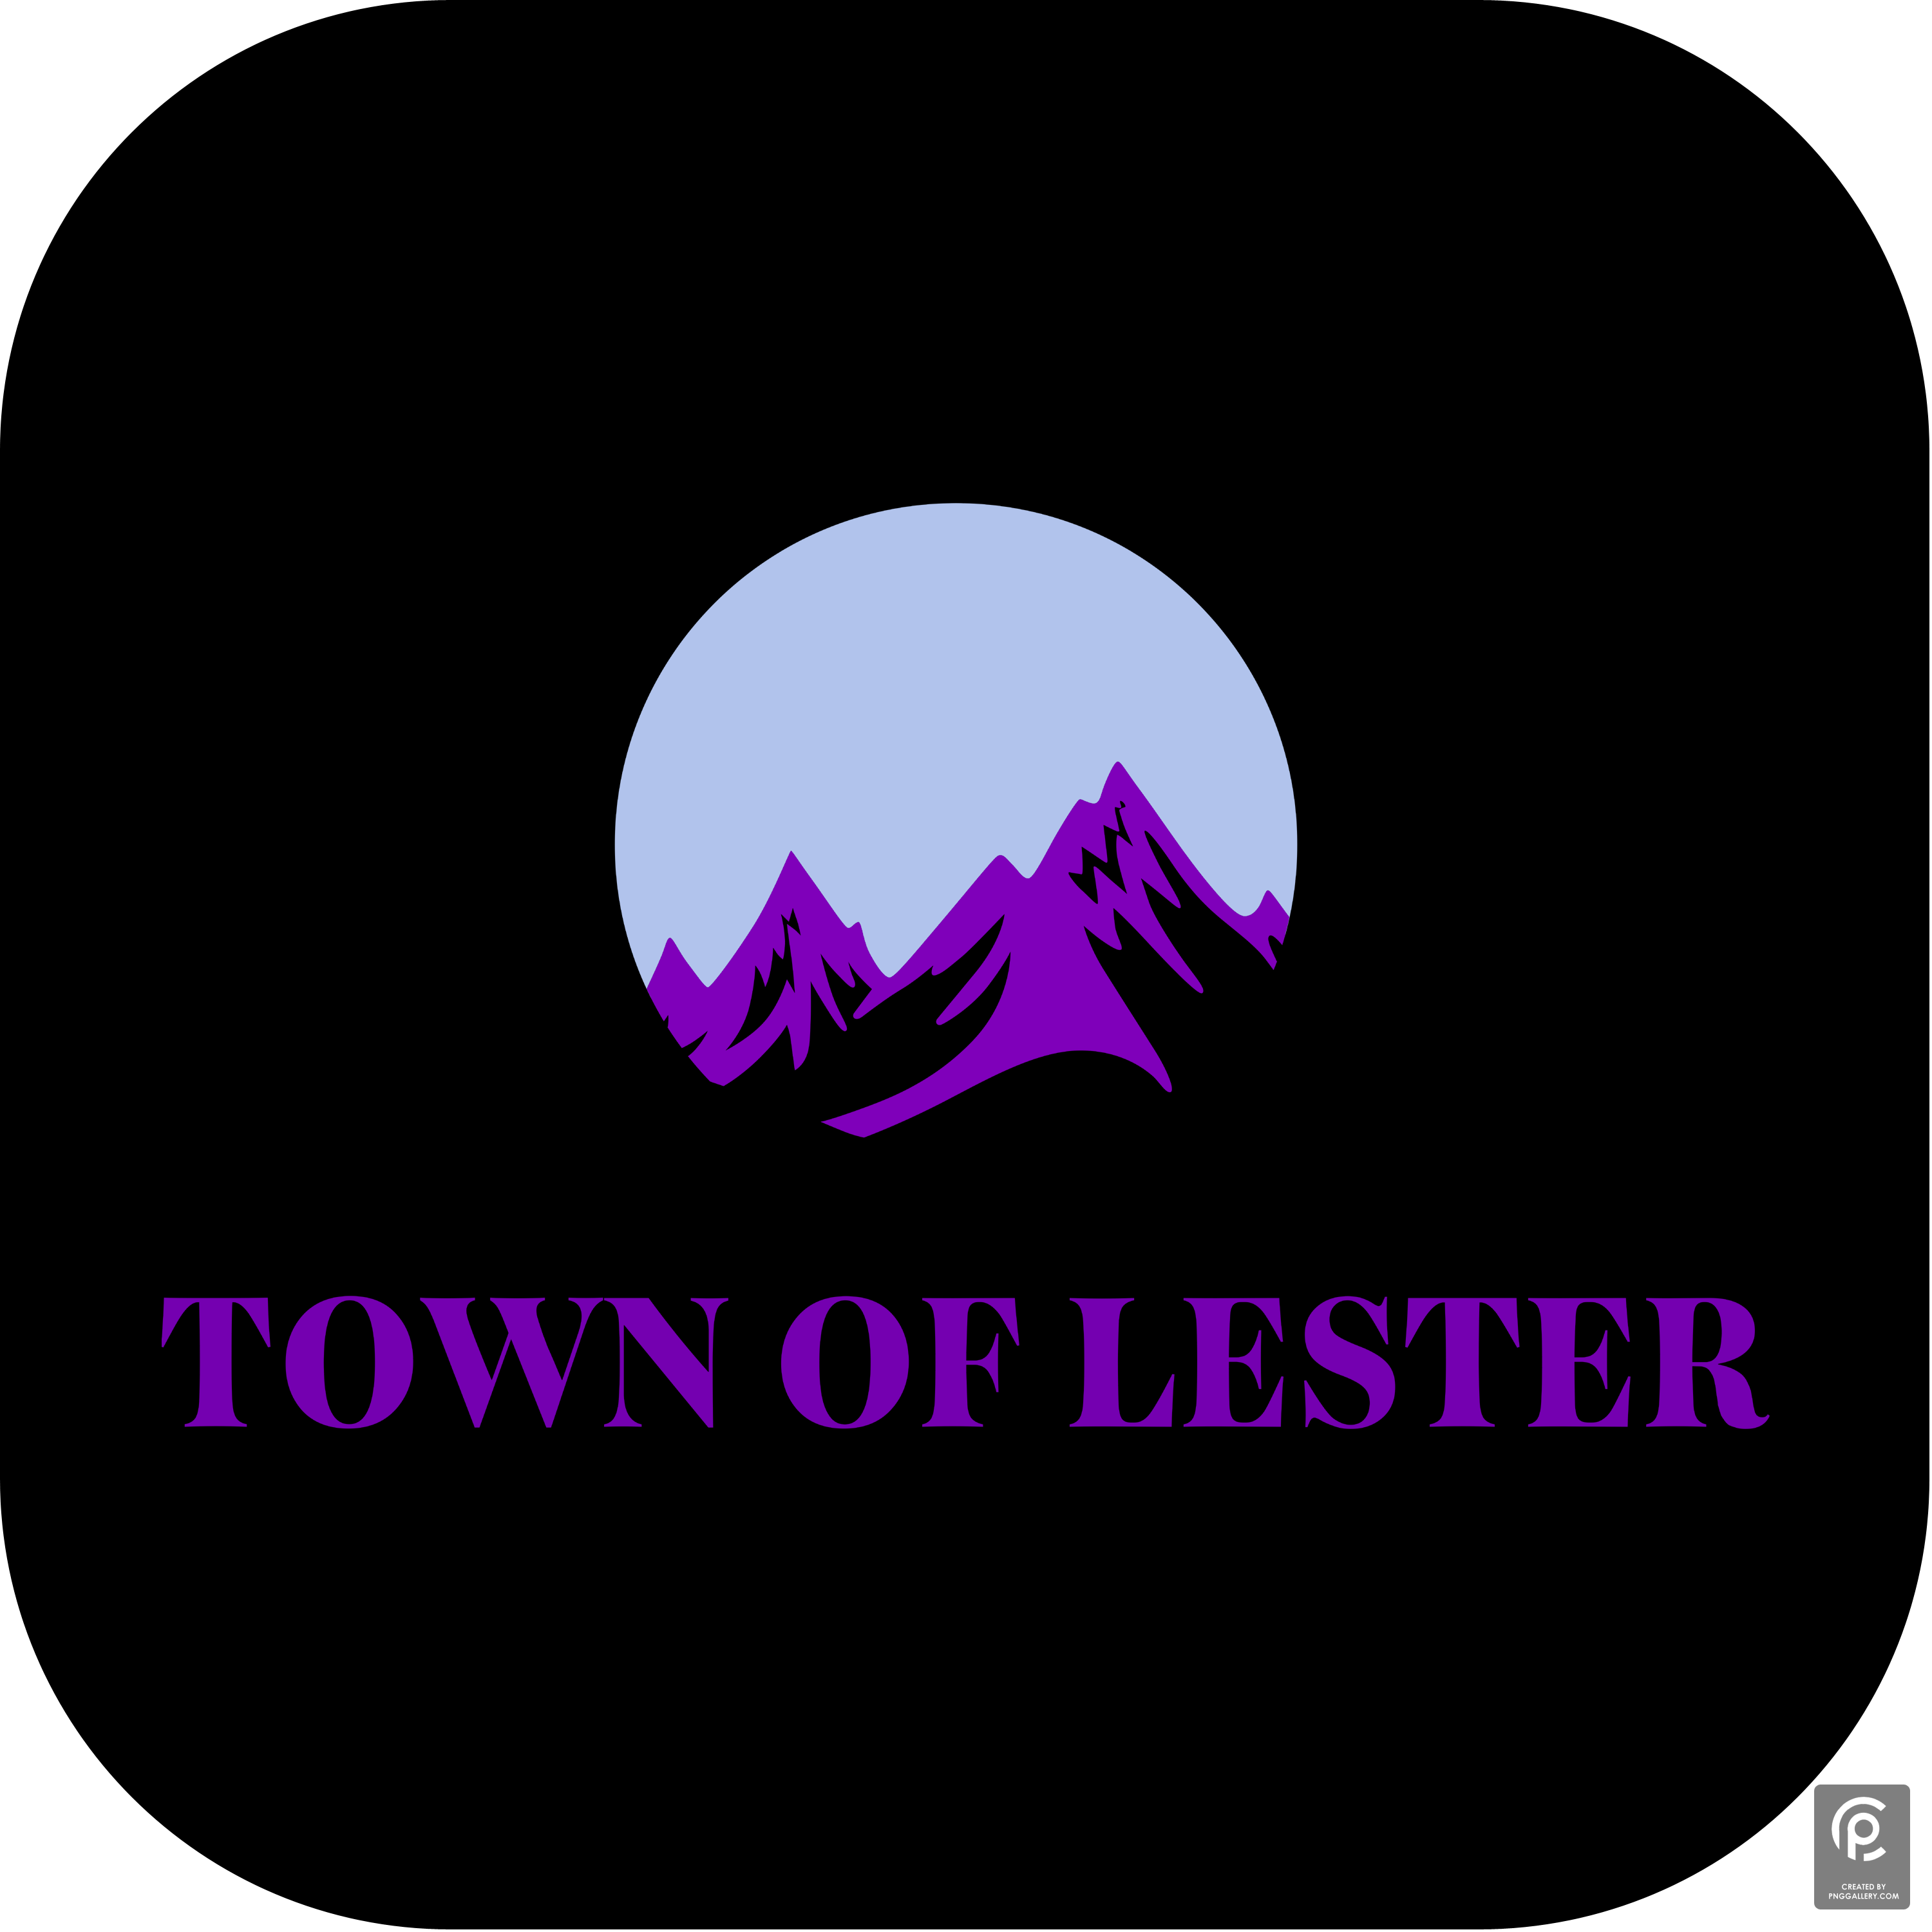 Lester West Virginia Logo Transparent Gallery